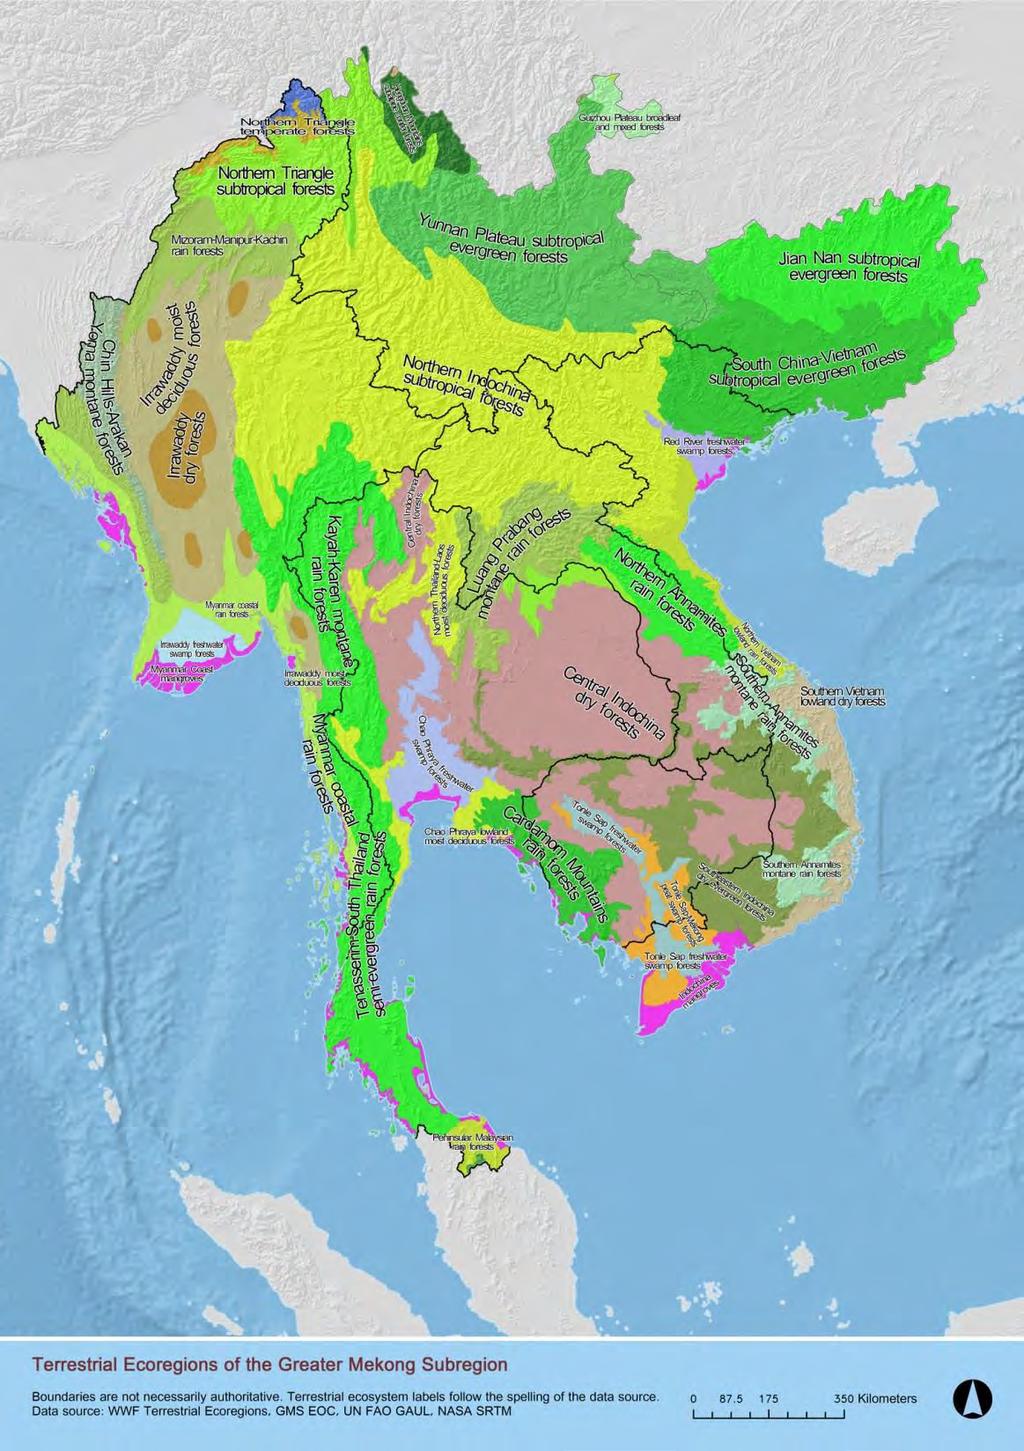 forests 6 major river basins (including Mekong) sustaining fisheries,